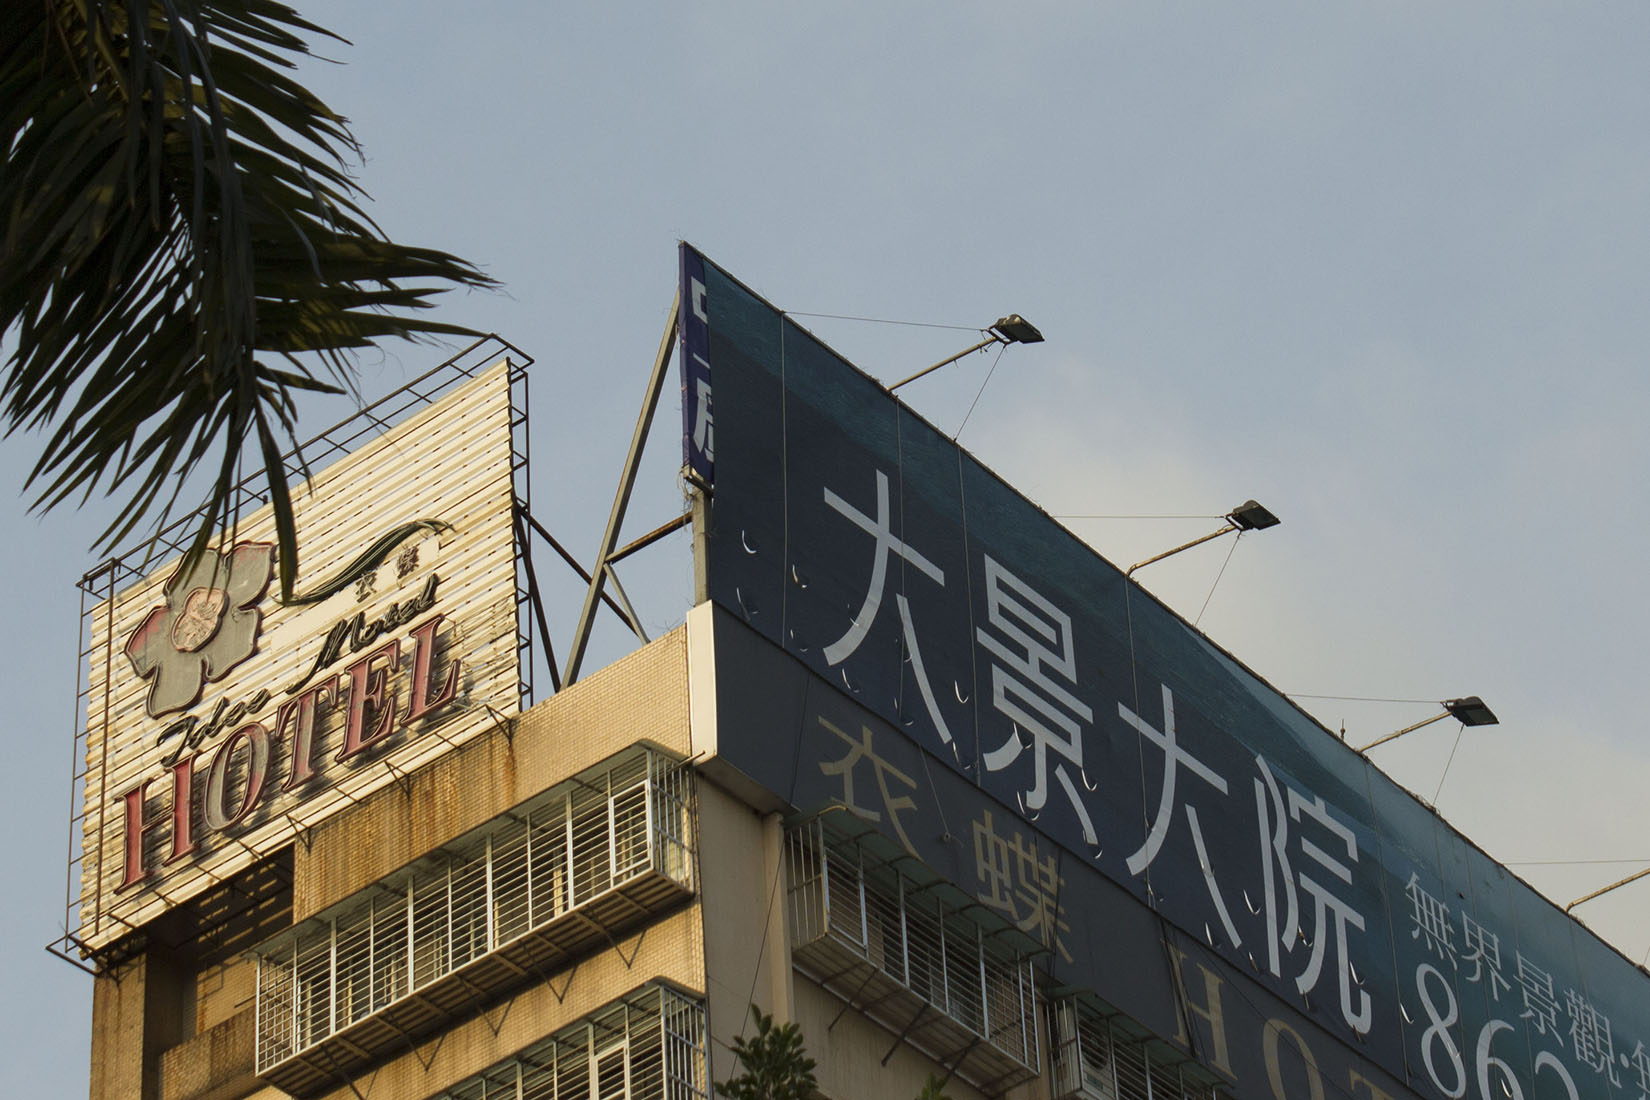 Taipei, voyage, hôtel, vieux motel, sinogrammes, publicité